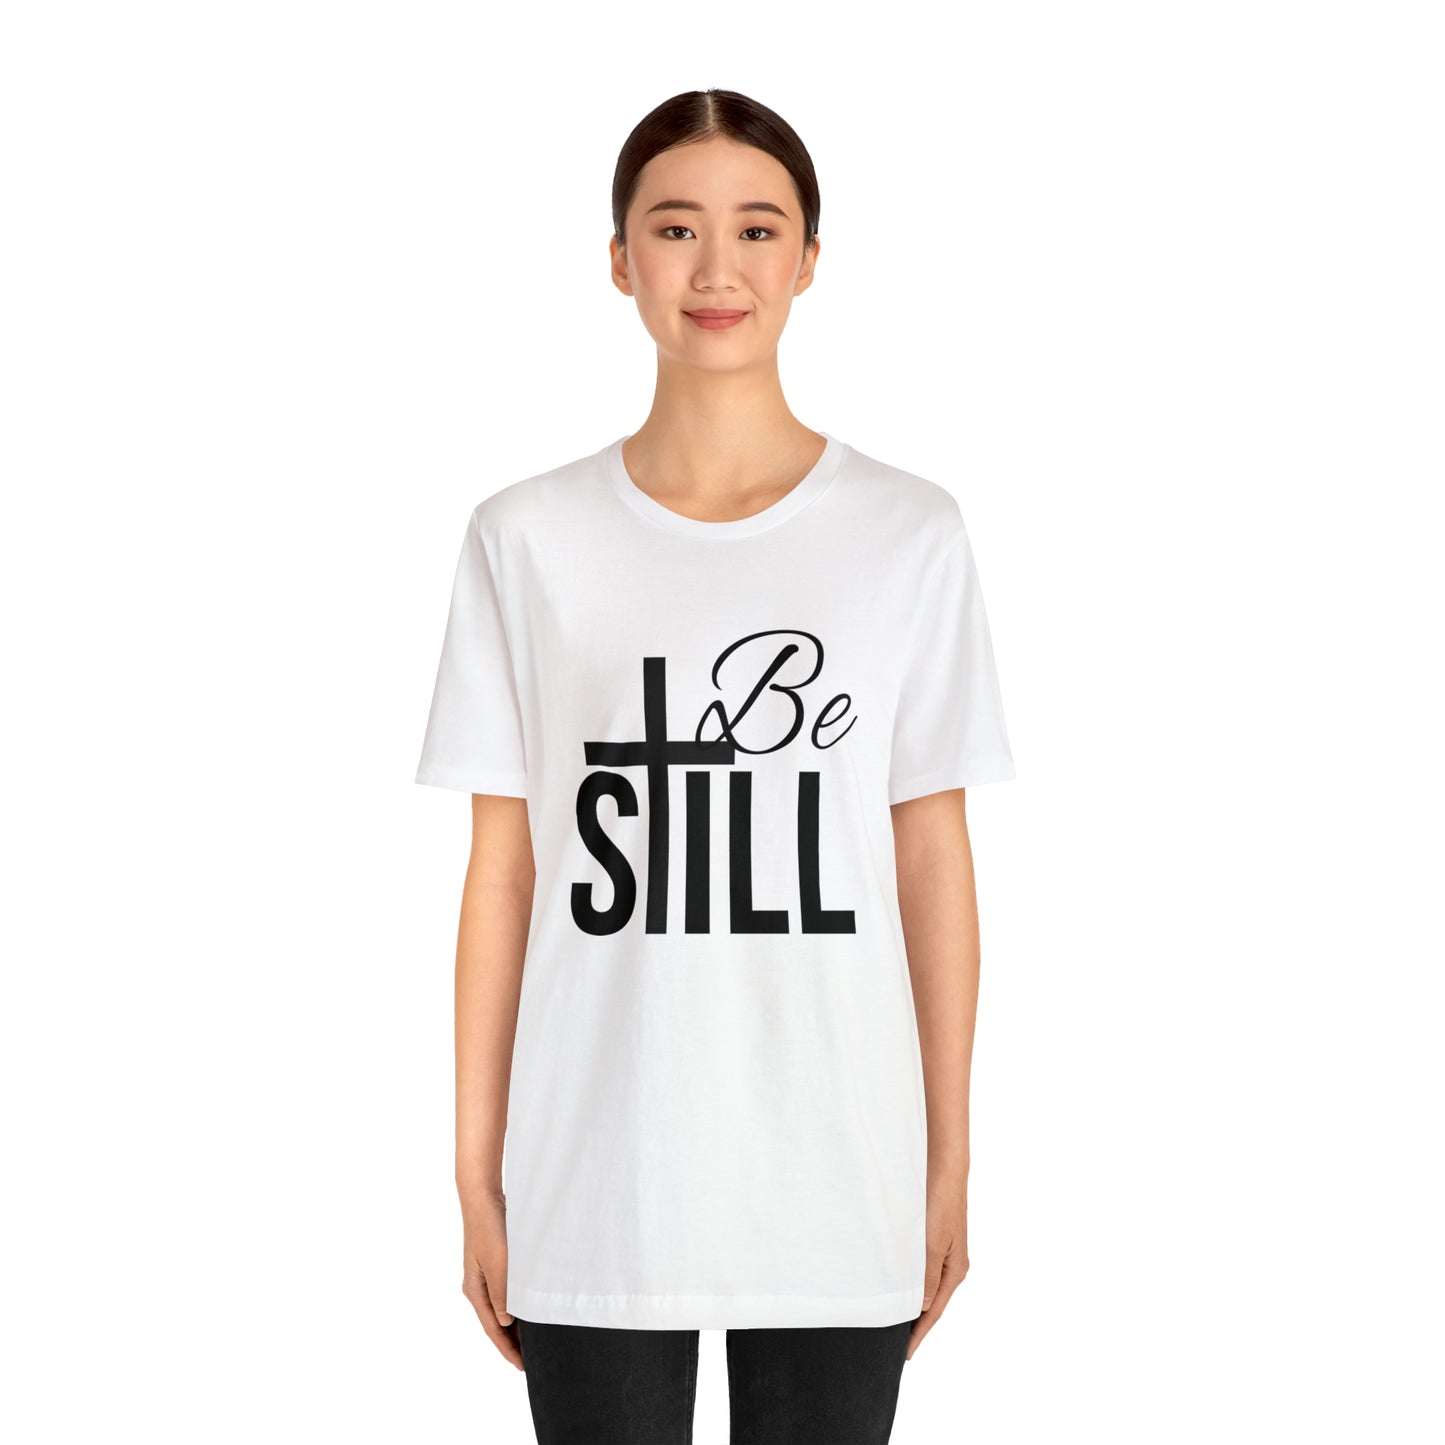 Be Still Christian Shirt, Minimalistic Bible Verse Tshirt design for Christian man, Inspirational Religious Faith TShirt gift for her